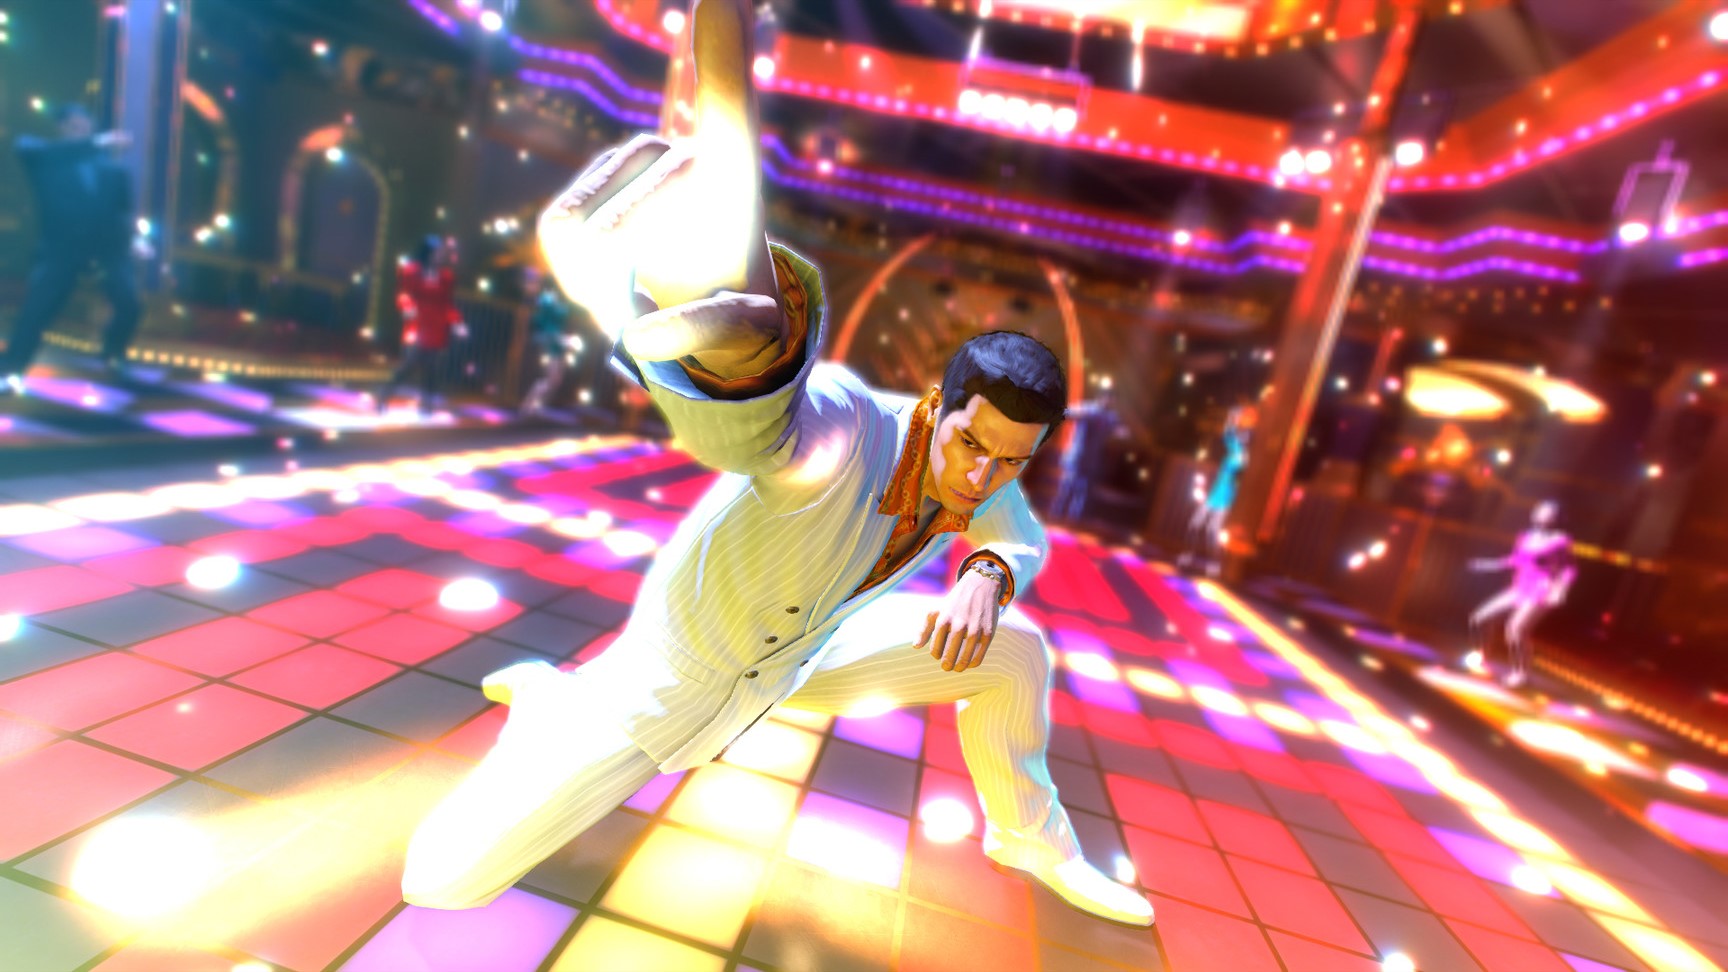 Kiryu from Yakuza 0 is dancing in a disco